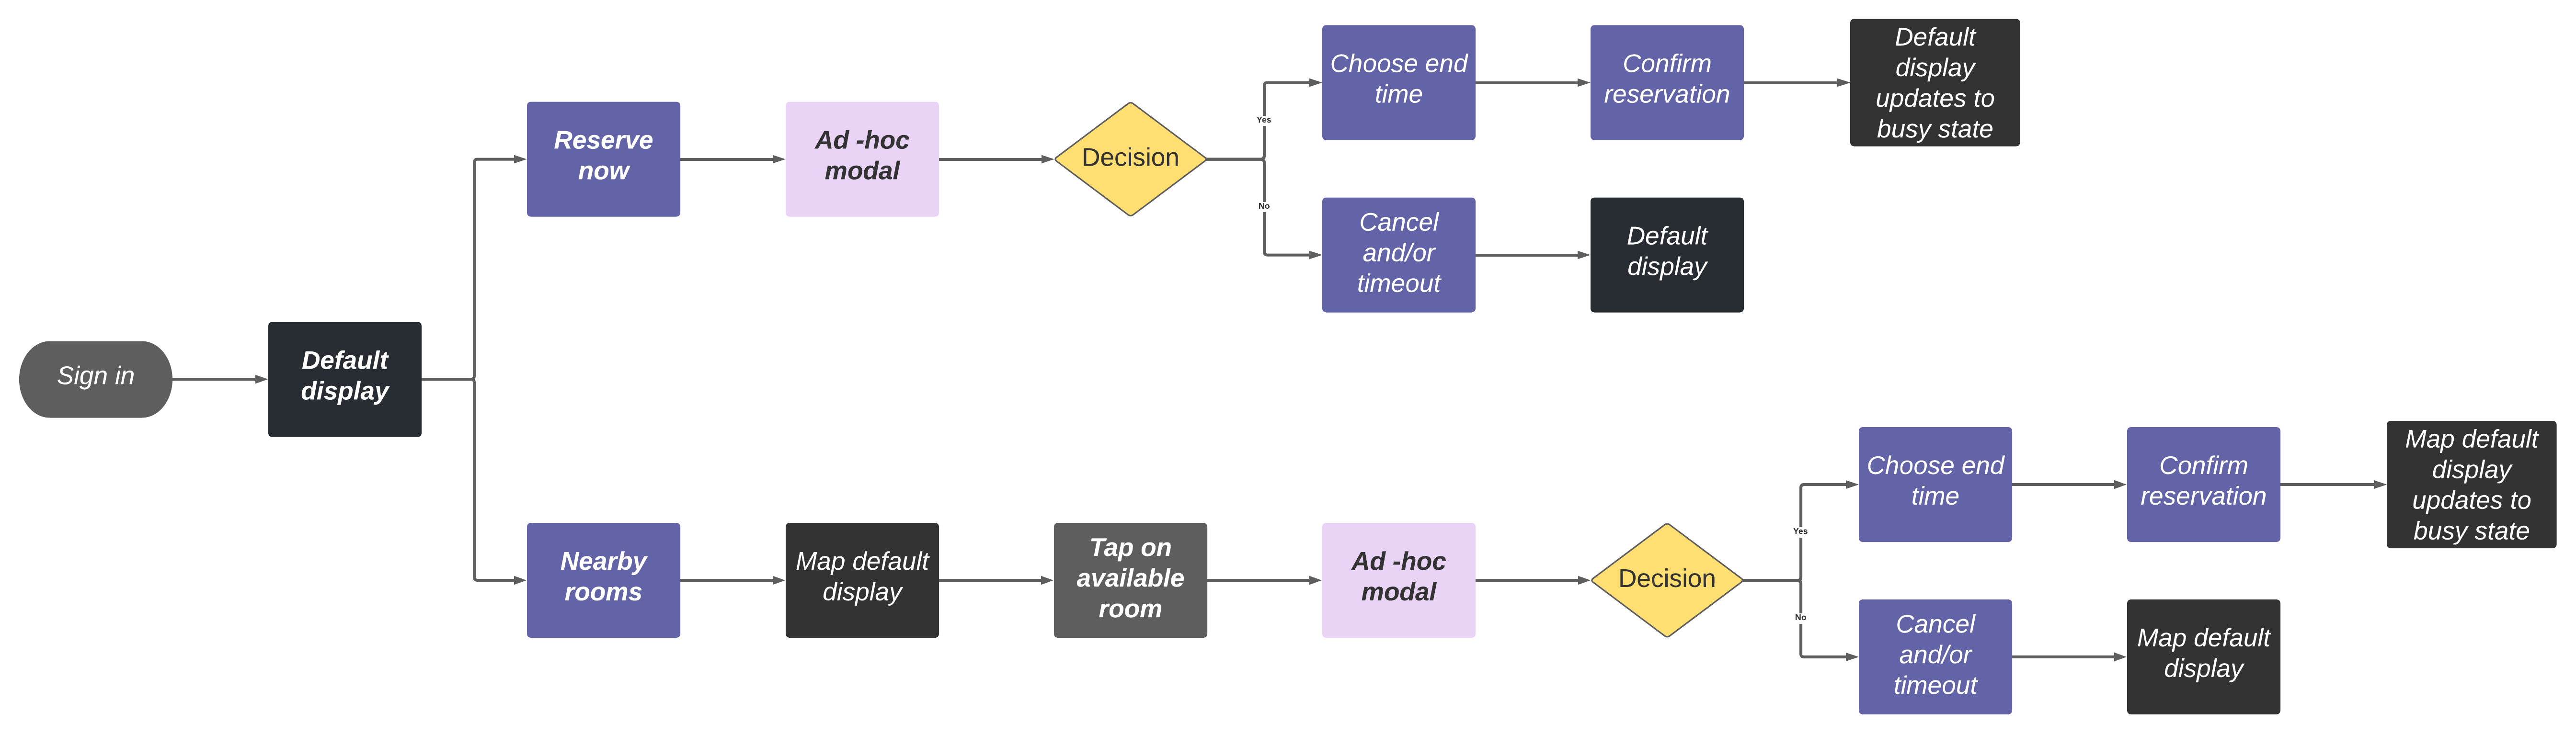 Scheduling panel flow chart